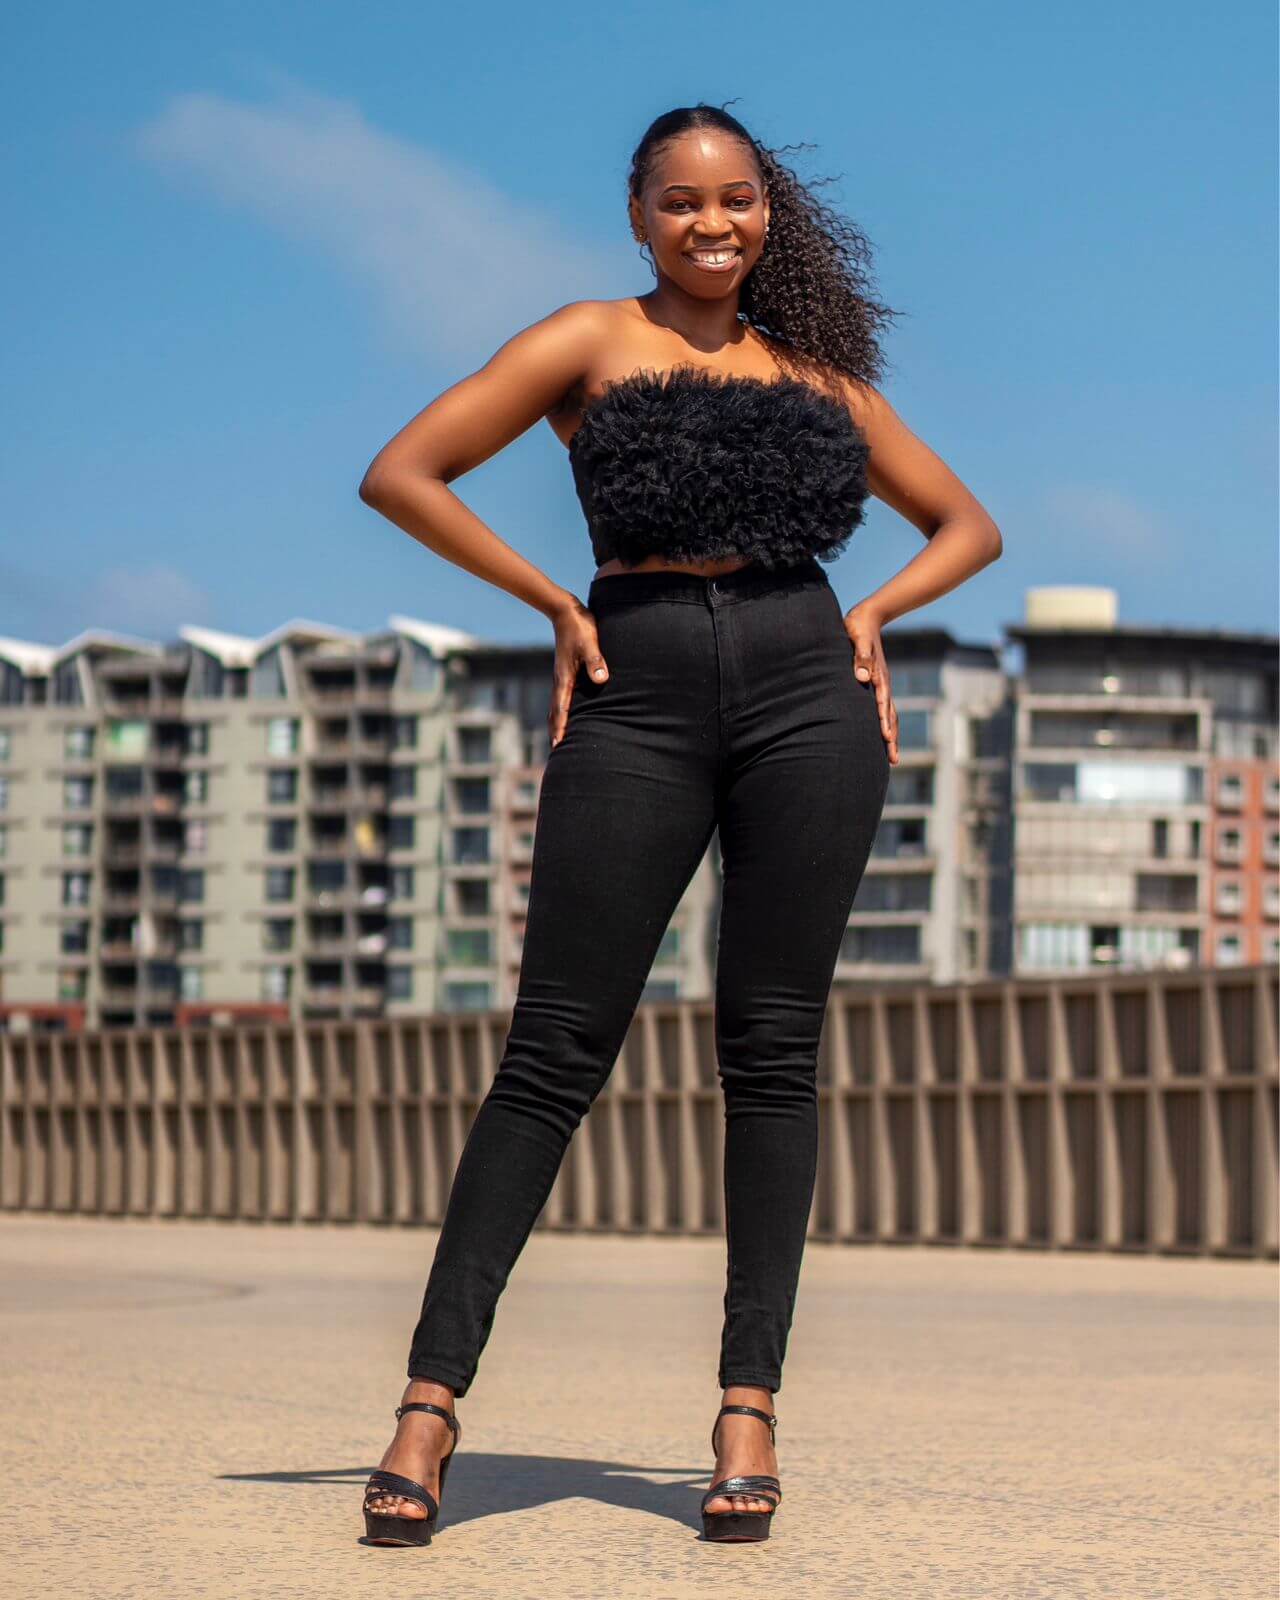 Zimkhitha Swelinkomo: From Eastern Cape to Durban's Modelling Spotlight